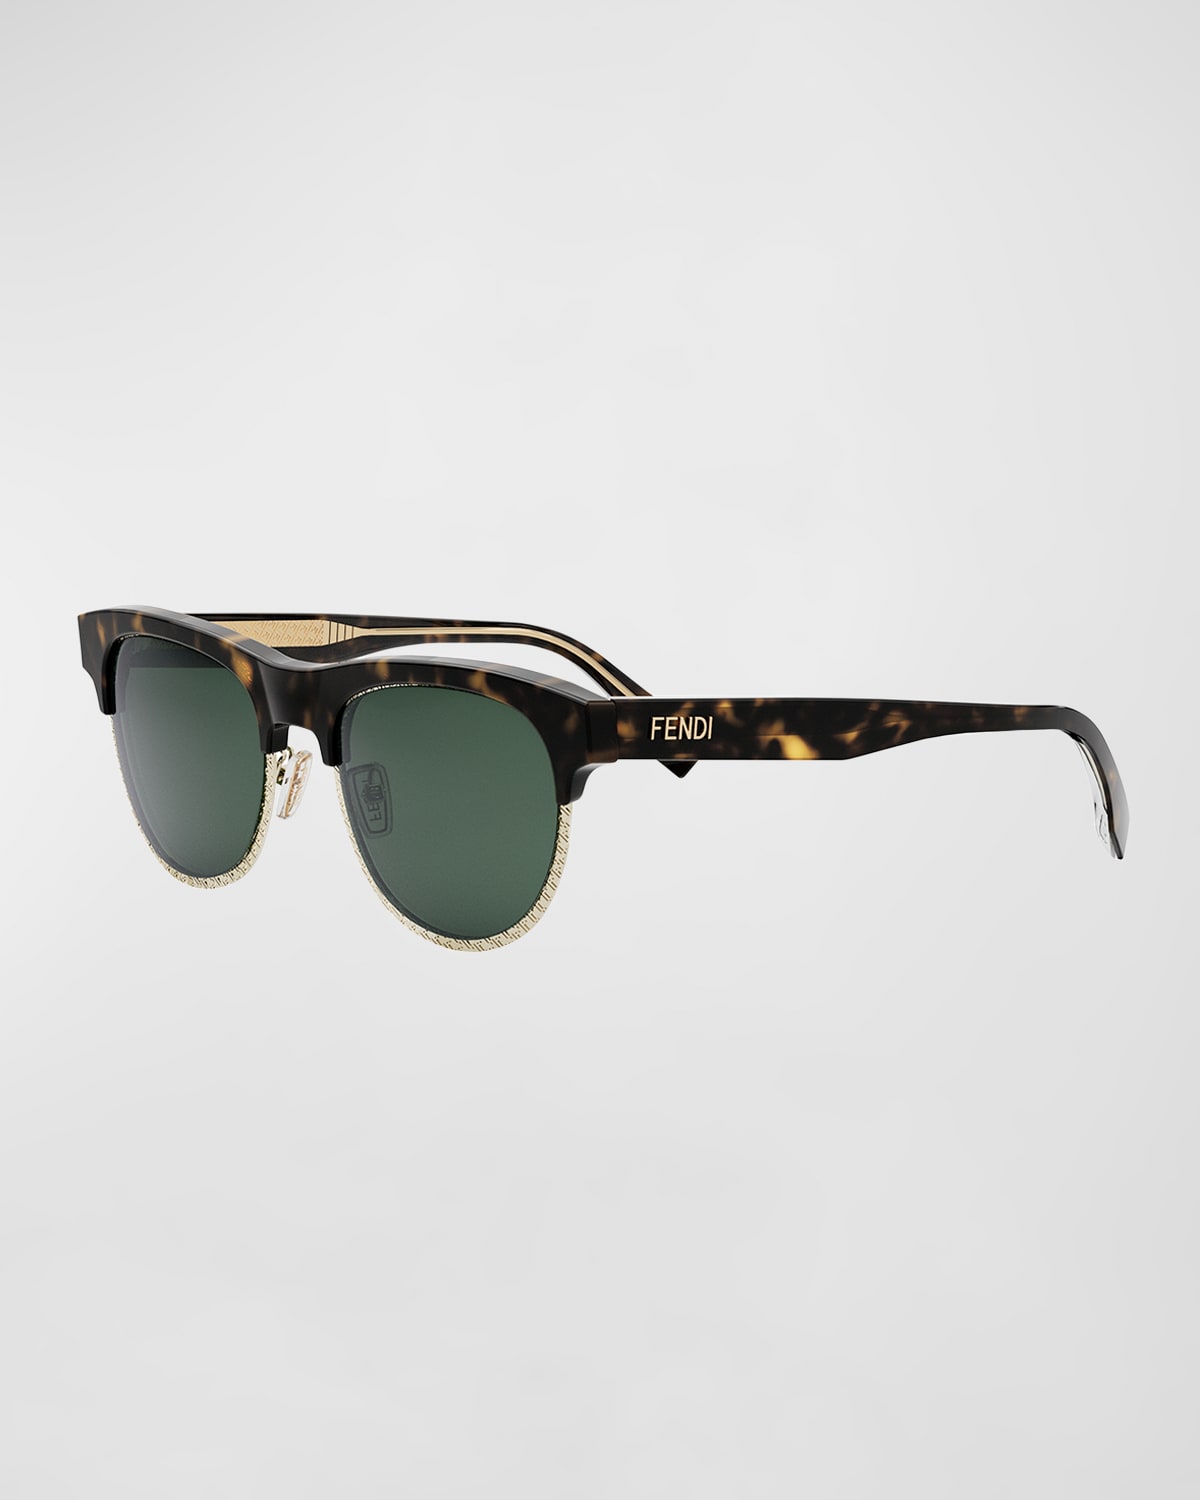 Fendi Travel Round Sunglasses, 51mm In Dark Havana/green Solid